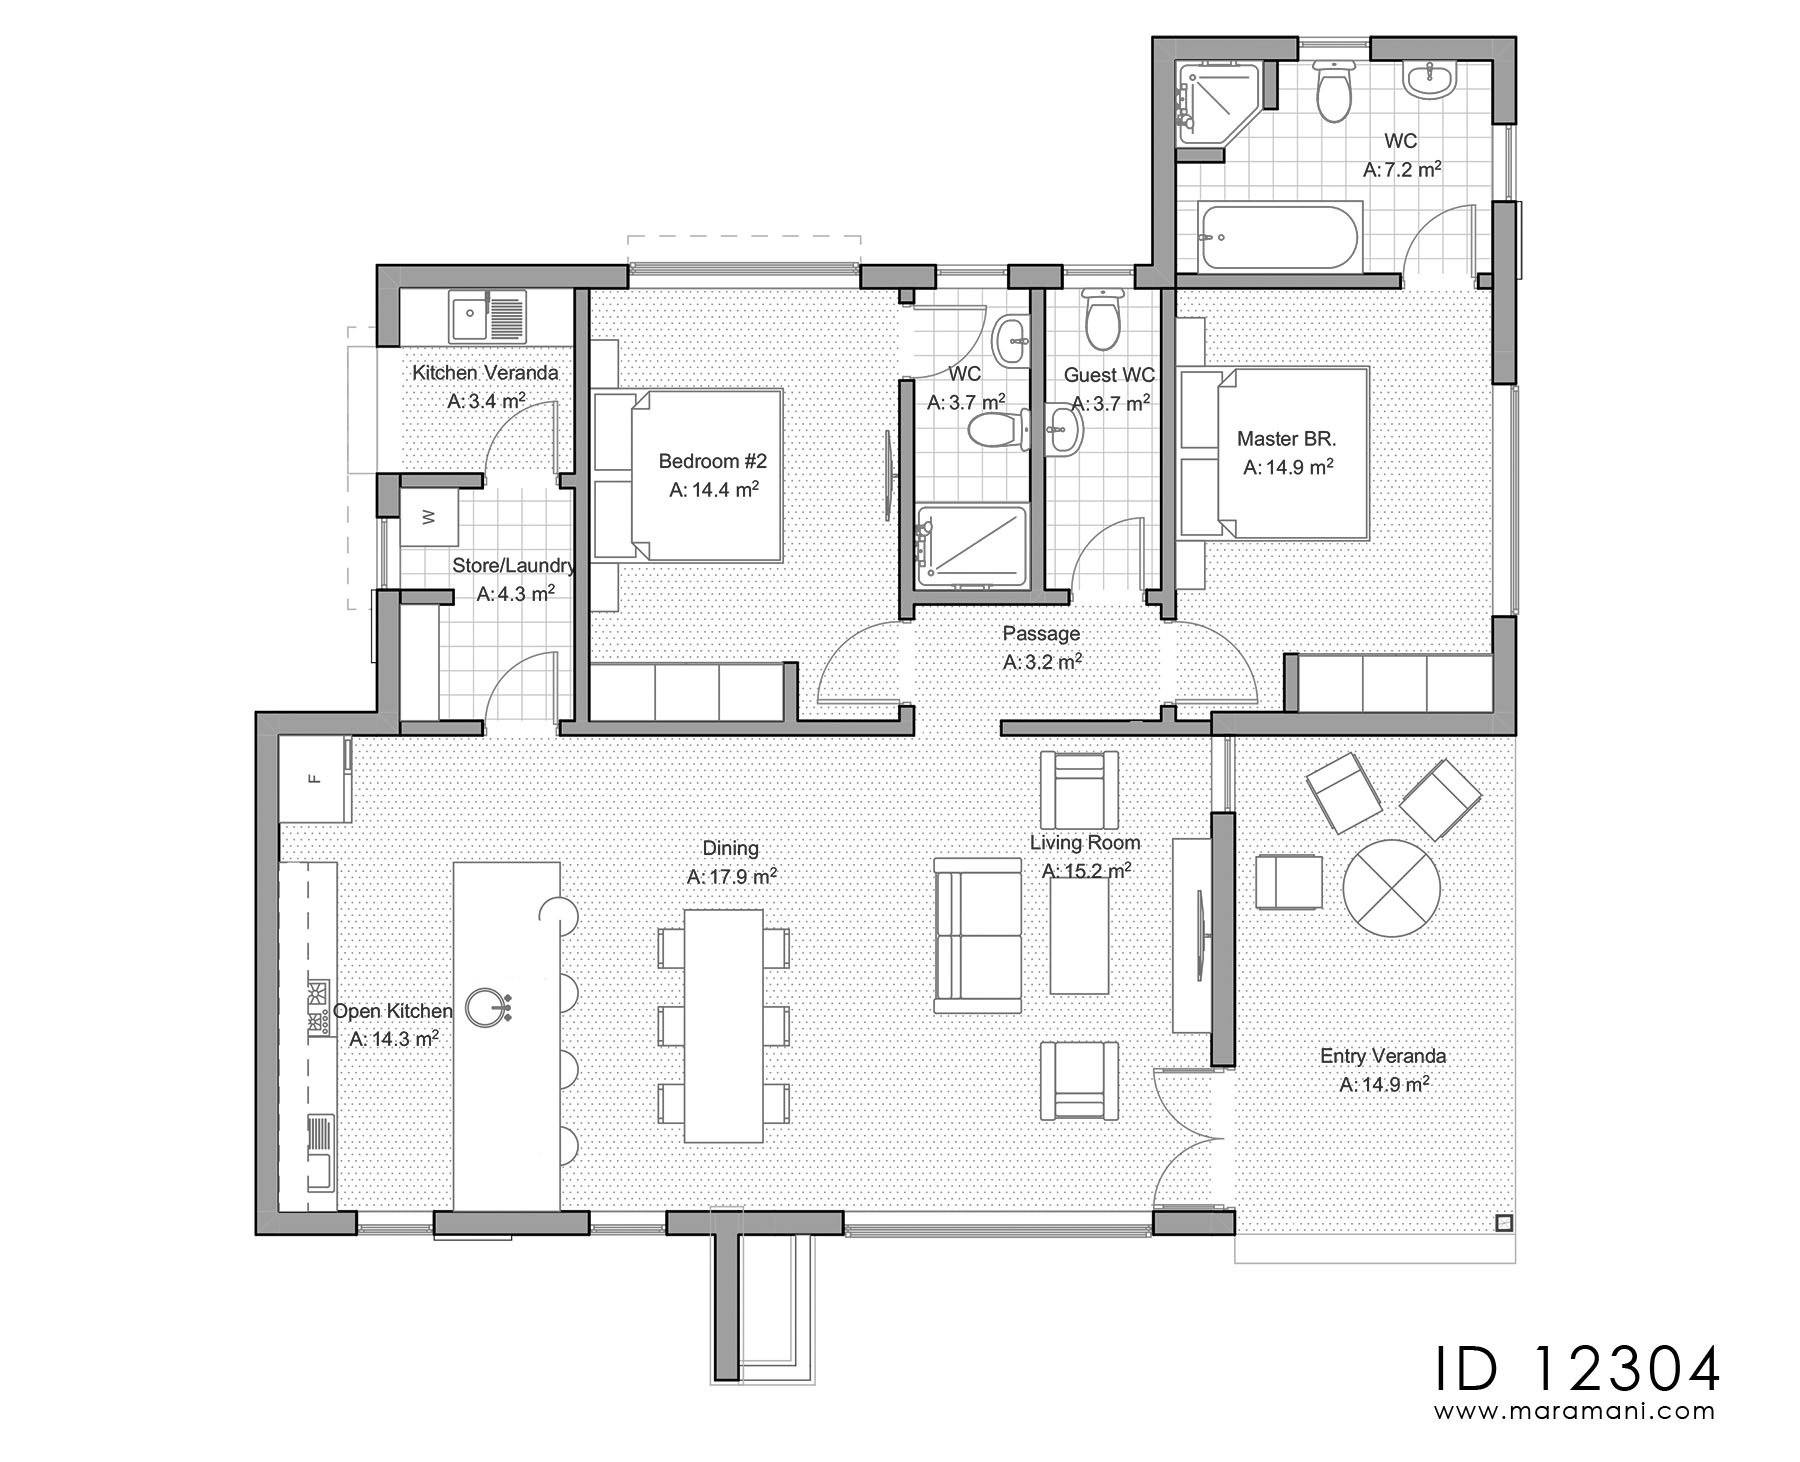 2 bedroom house plan - ID 12304